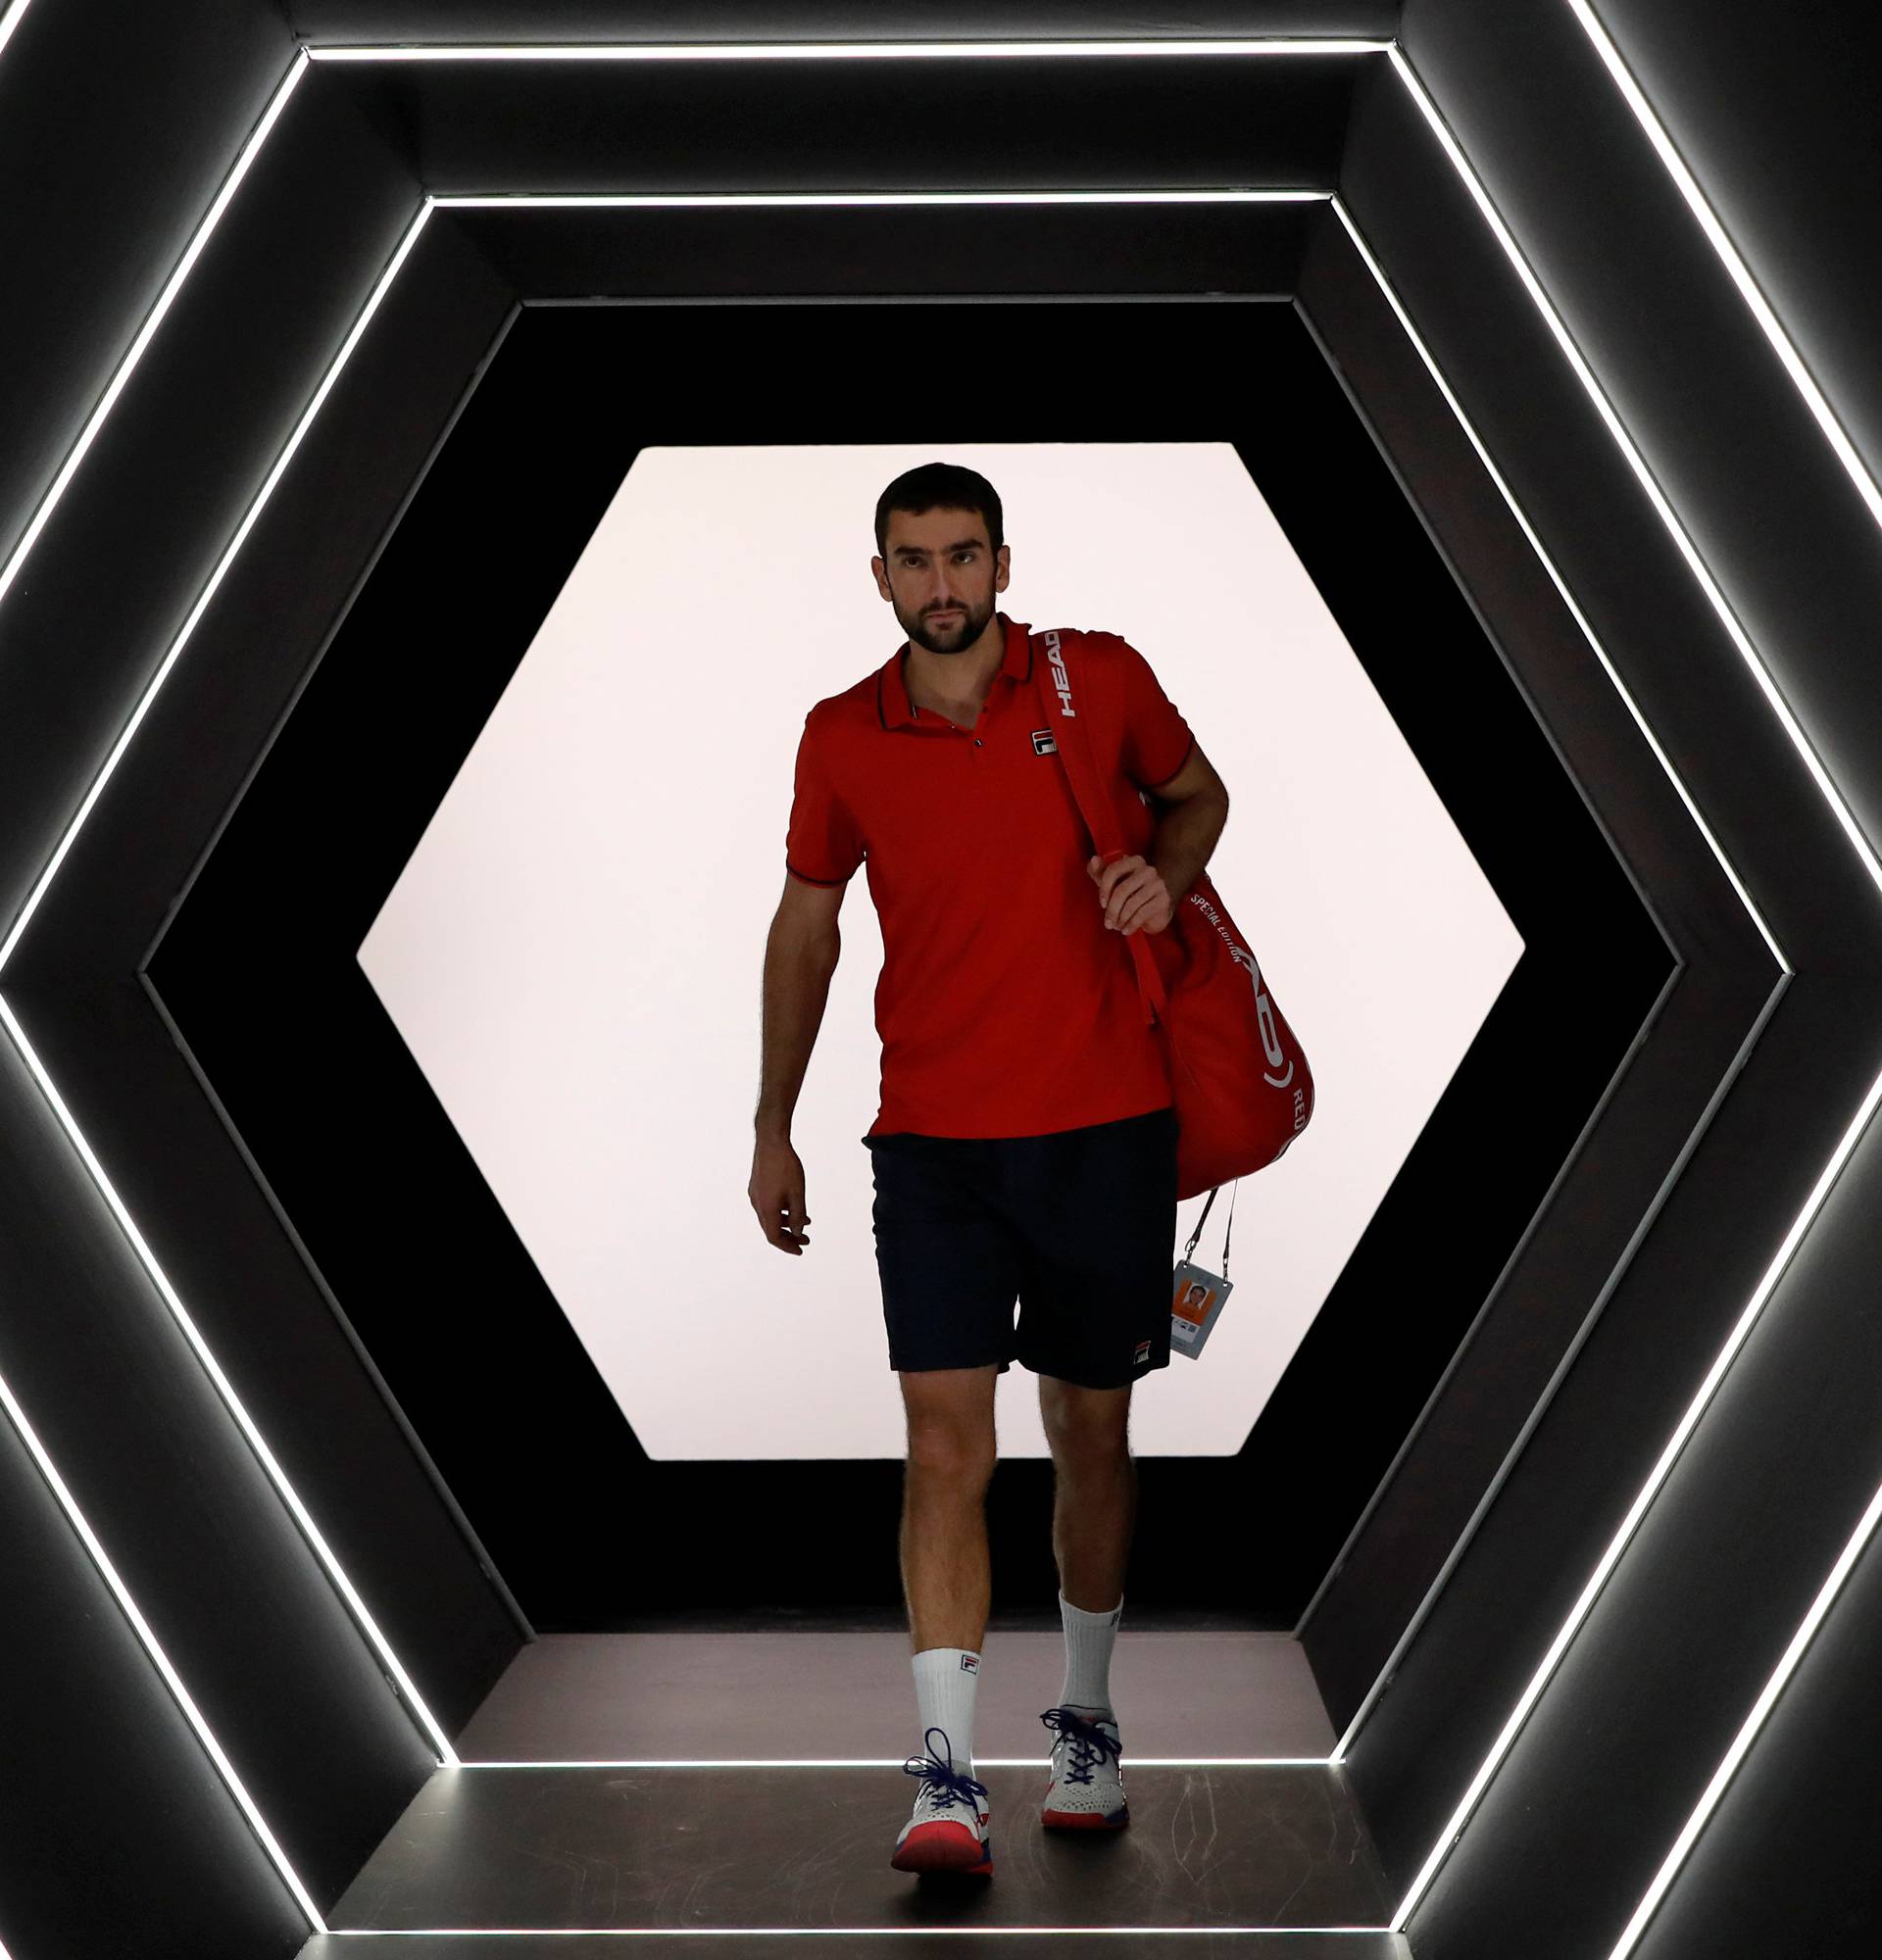 Tennis - Paris Masters tennis tournament men's singles quarterfinals - Novak Djokovic of Serbia v Marin Cilic of Croatia